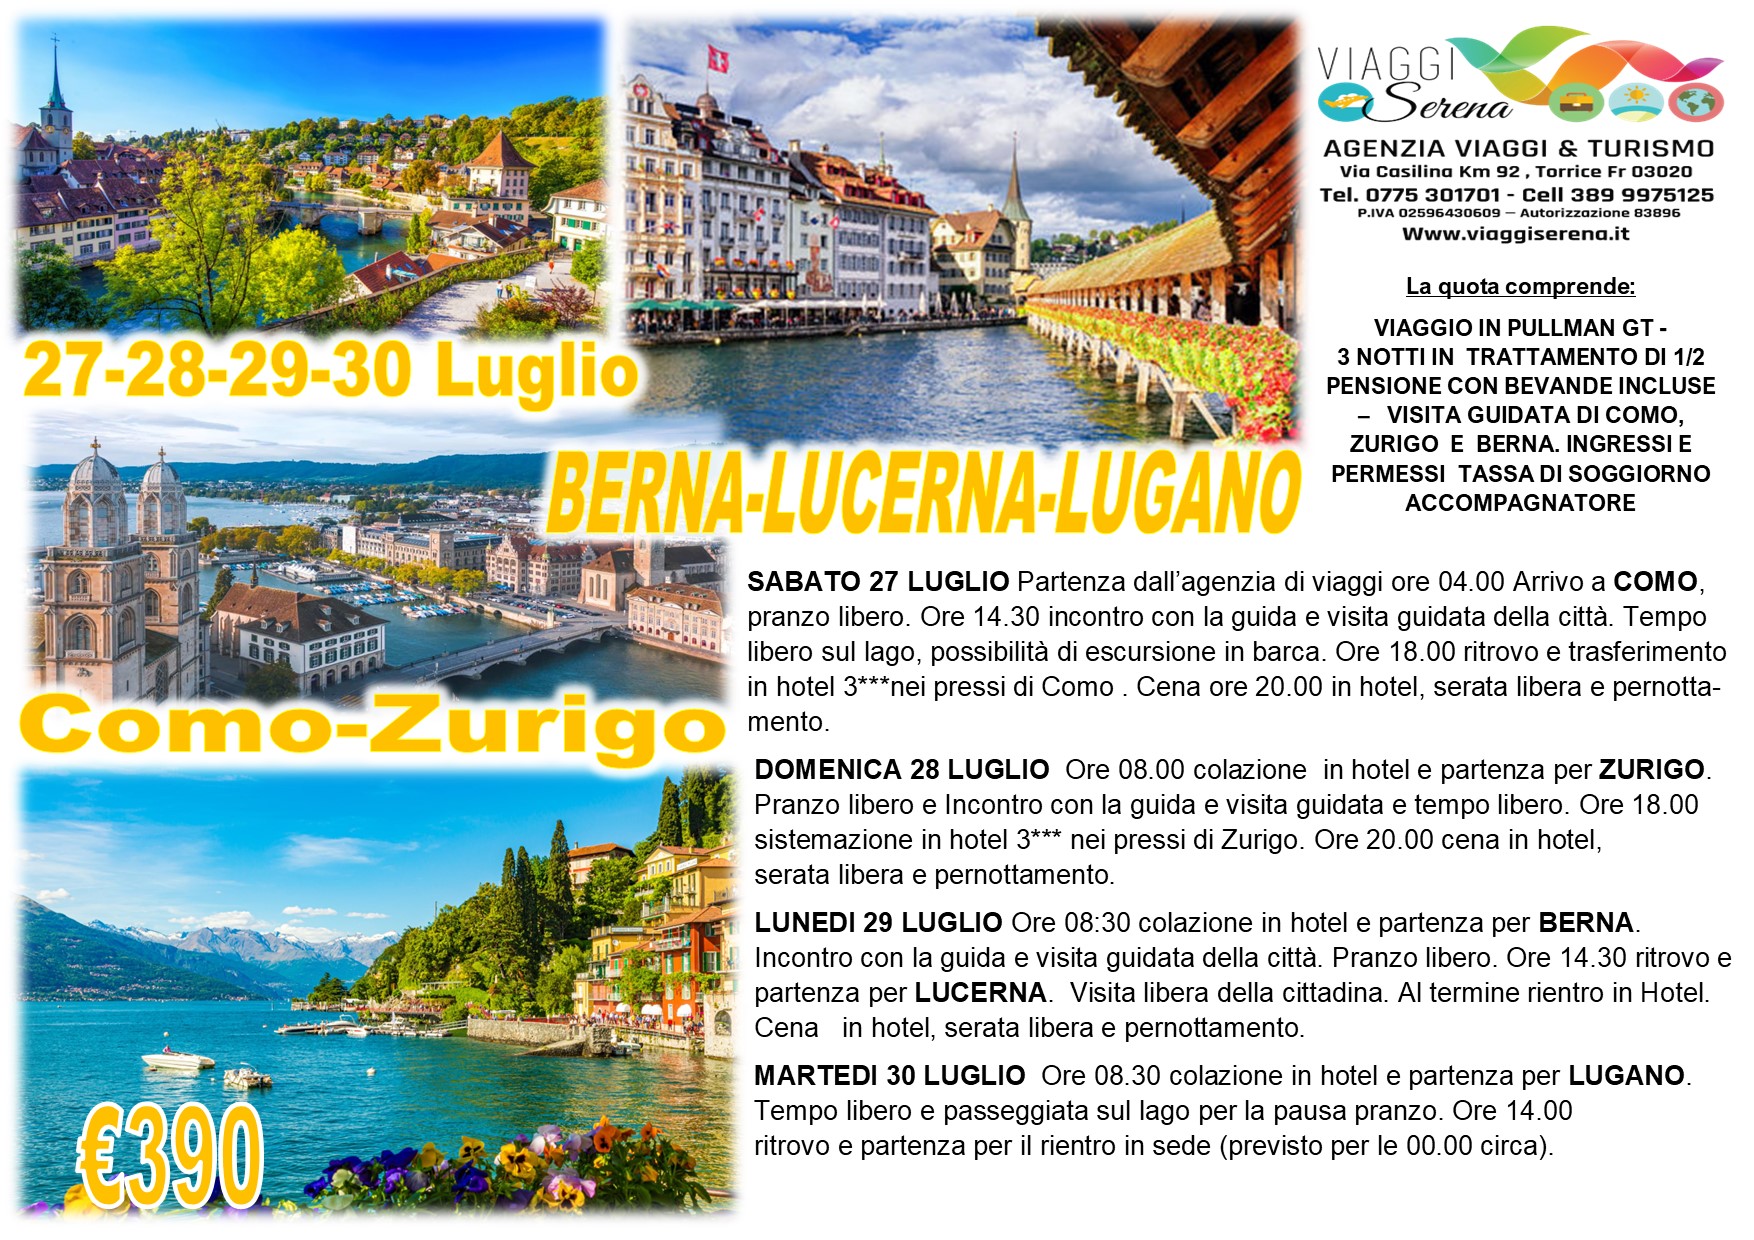 Viaggi di gruppo: Tour Svizzera Zurigo, Lucerna, Berna & Lugano 27-28-29-30 Luglio €390,00